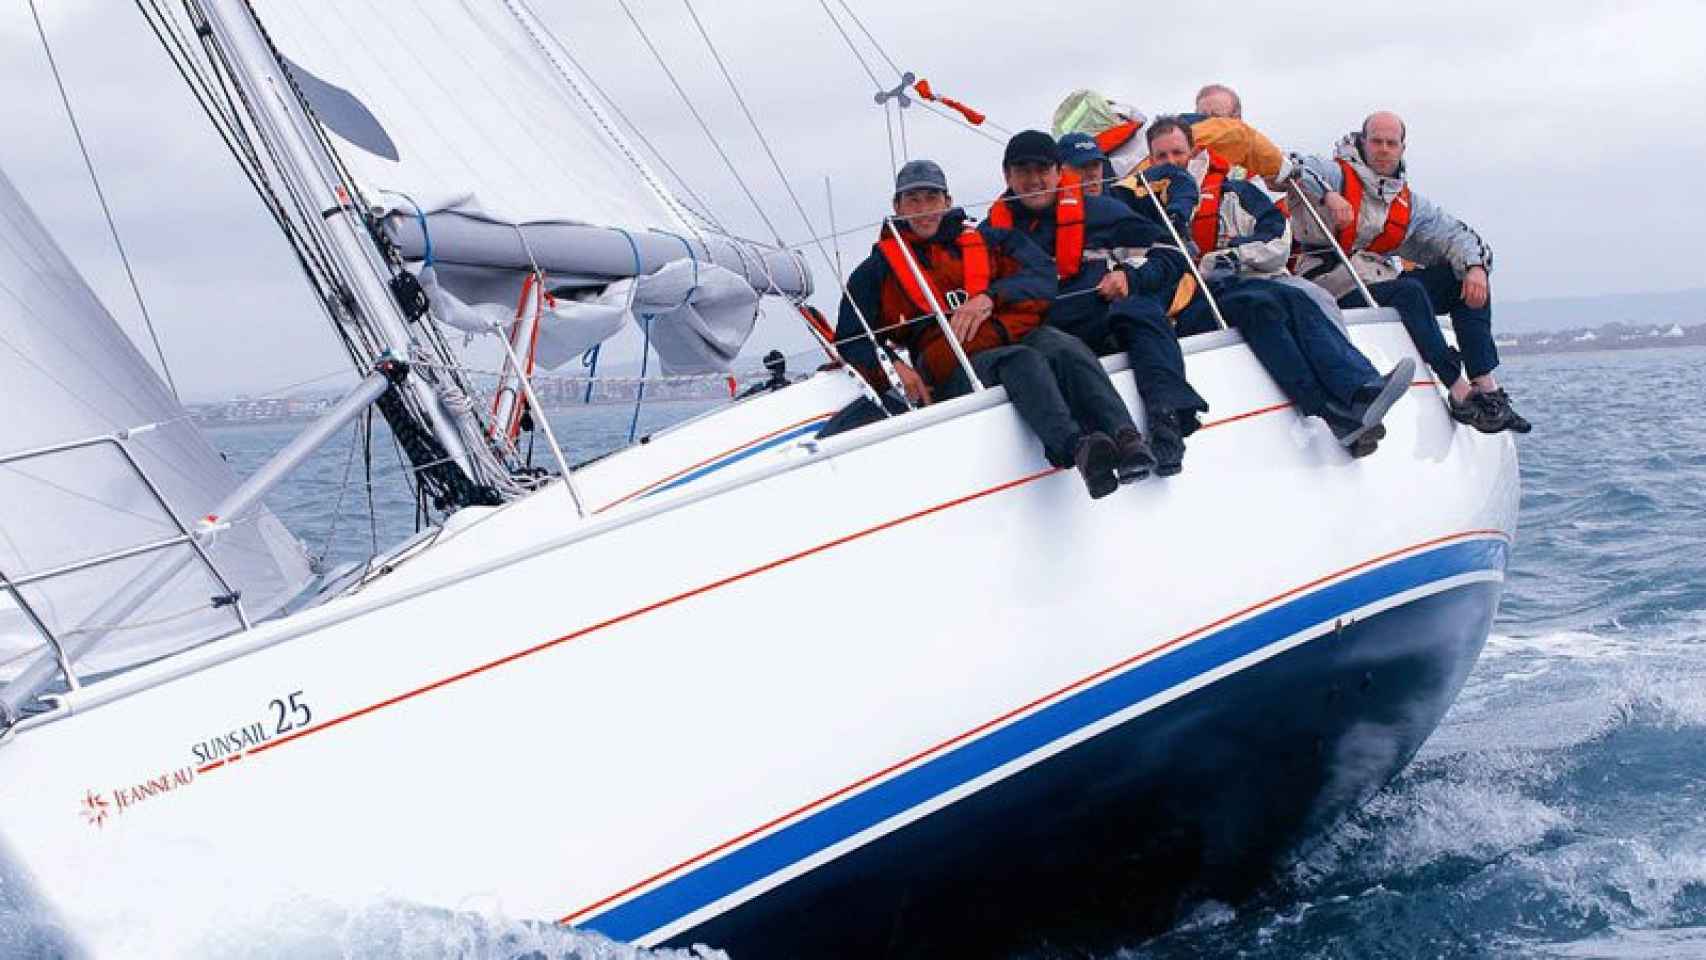 Popsail ofrece actividades náuticas a precios asequibles.